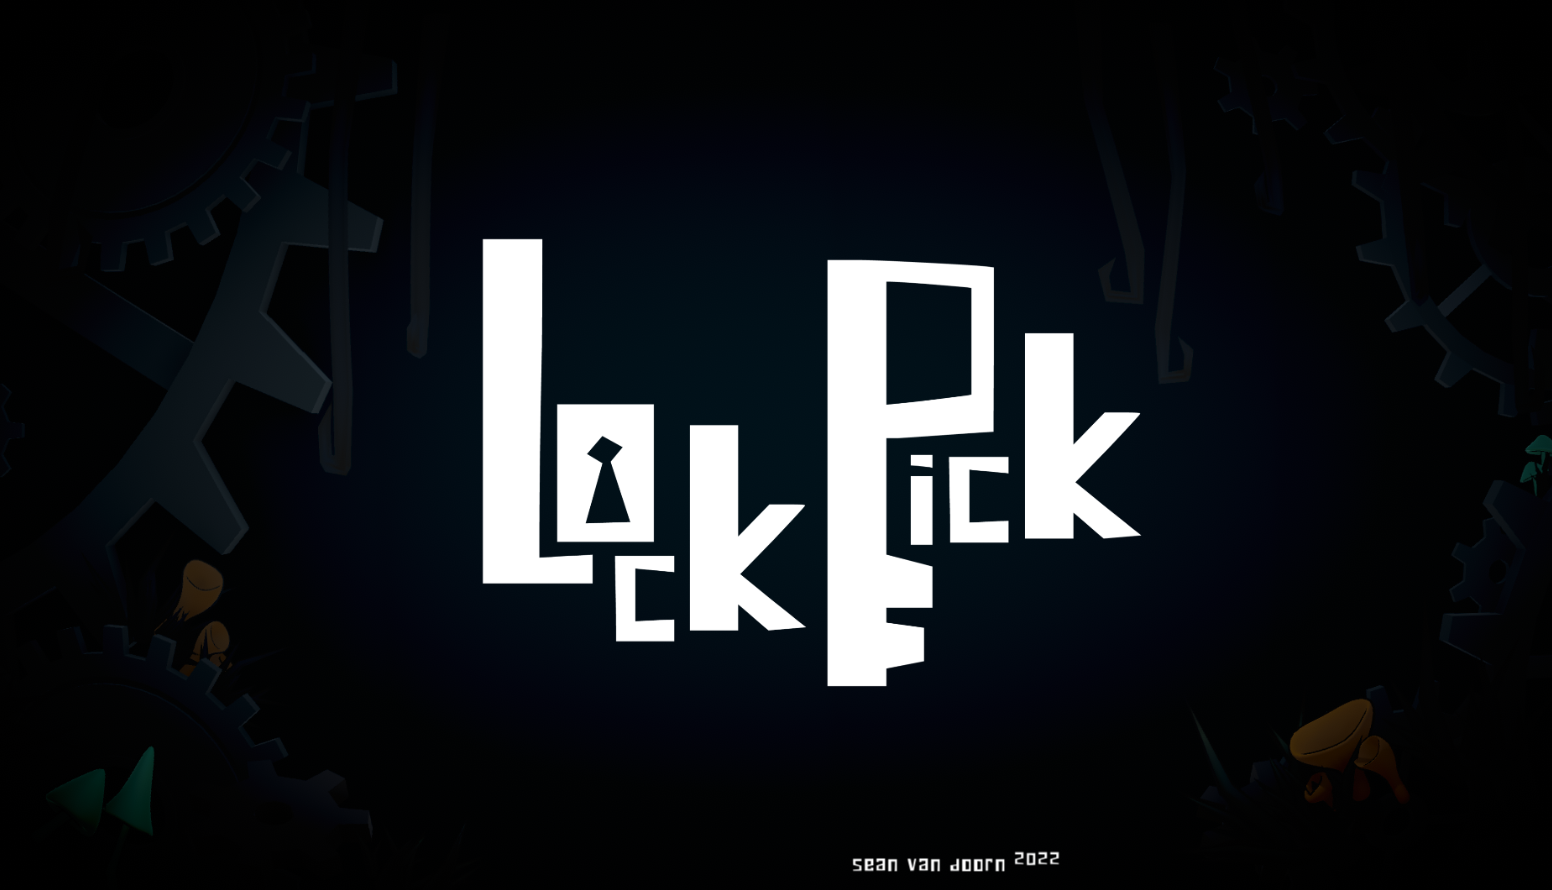 Lock Pick